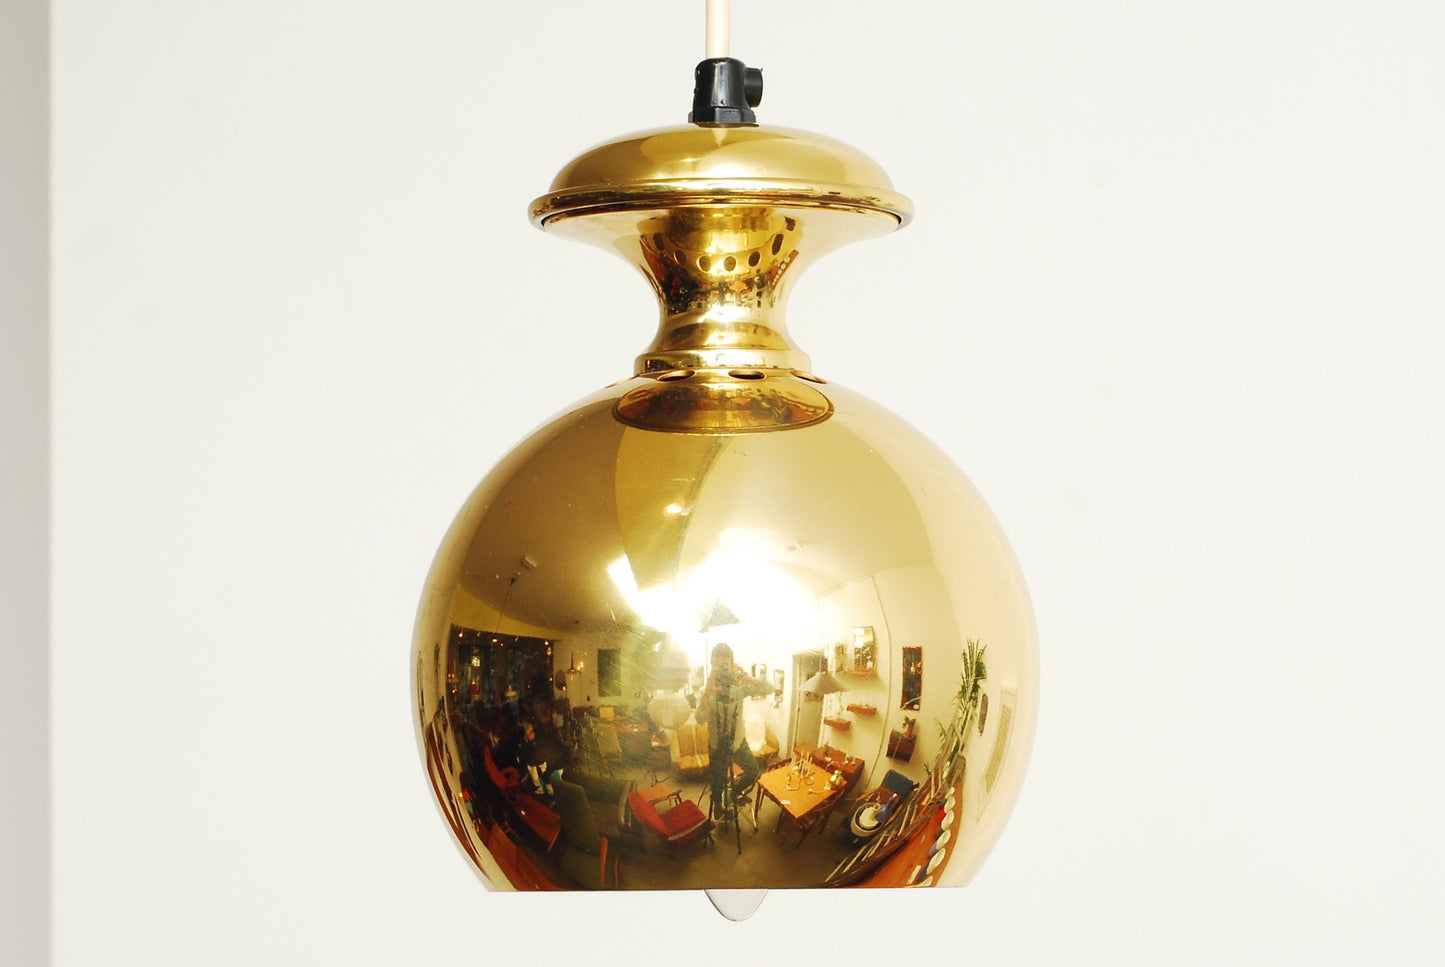 Brass bowl pendant light